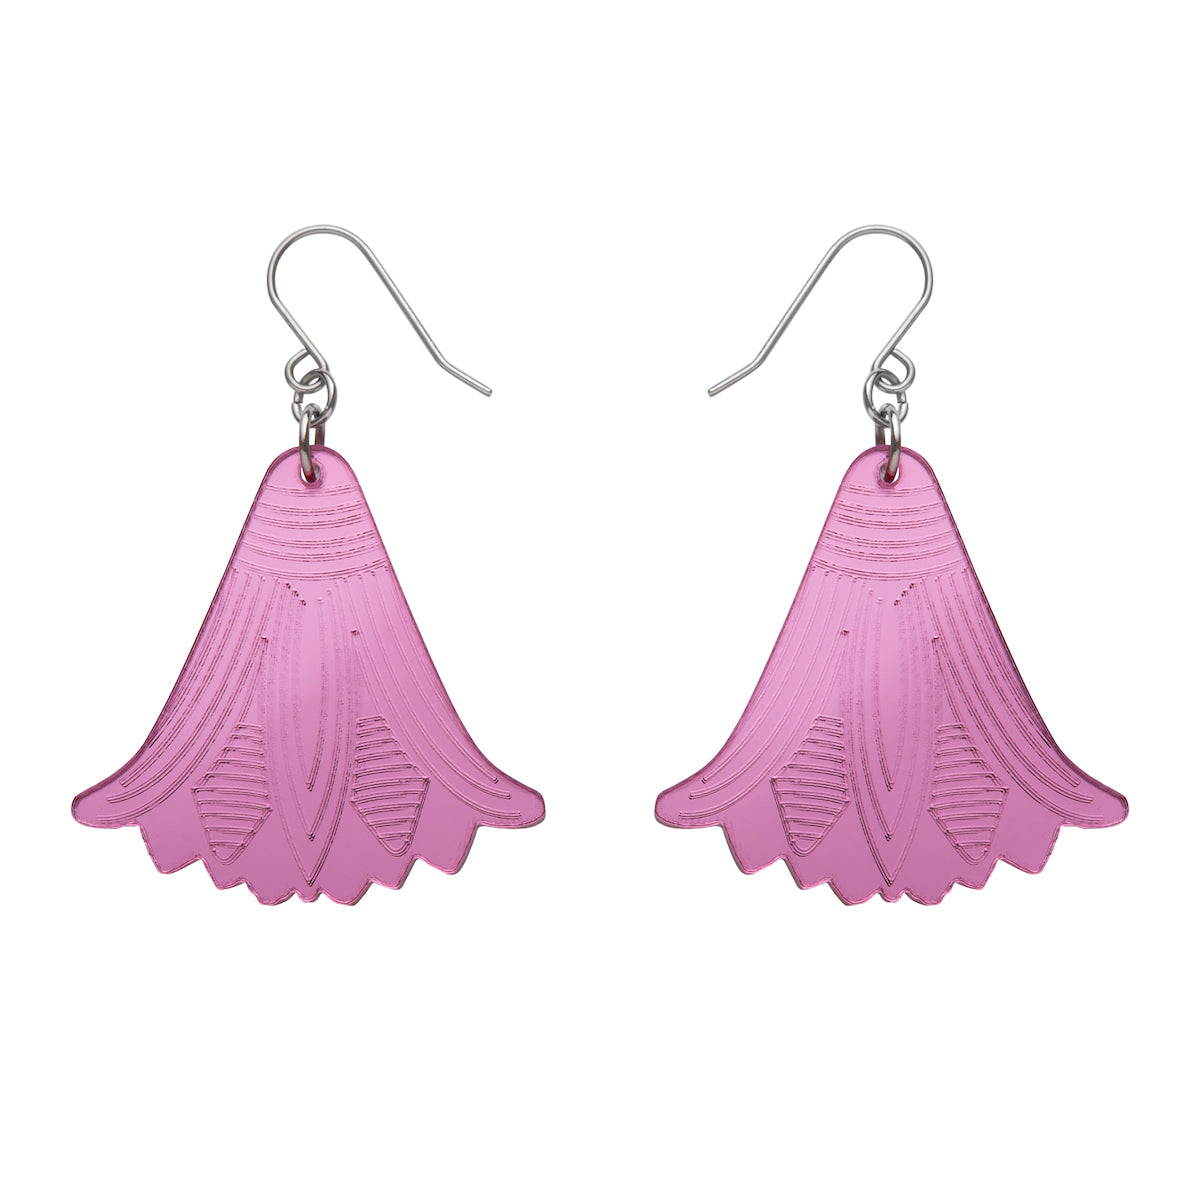 Lotus Mirror Drop Earrings in Pink by Erstwilder